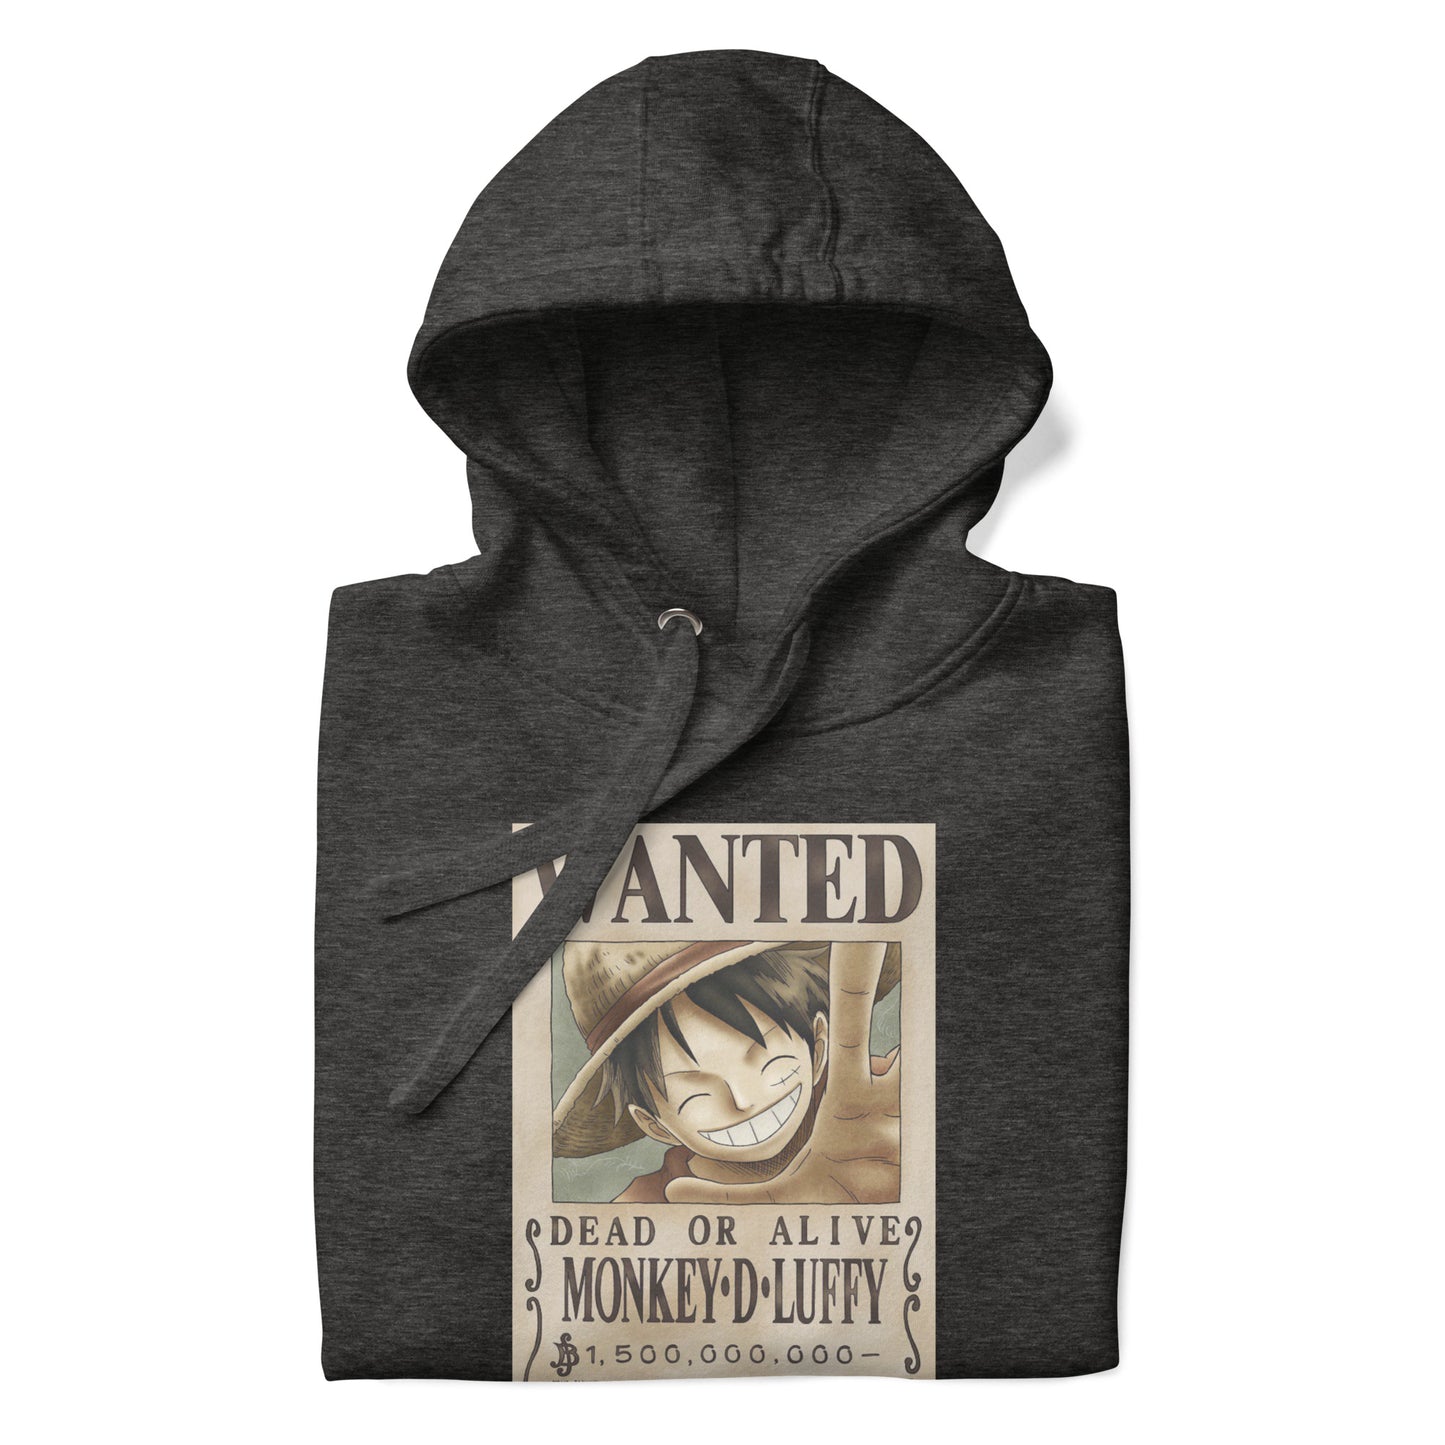 One Piece Monkey D. Luffy Straw Hat Pirates Wanted Poster Printed Premium Streetwear Hoodie Sweatshirt Charcoal Grey